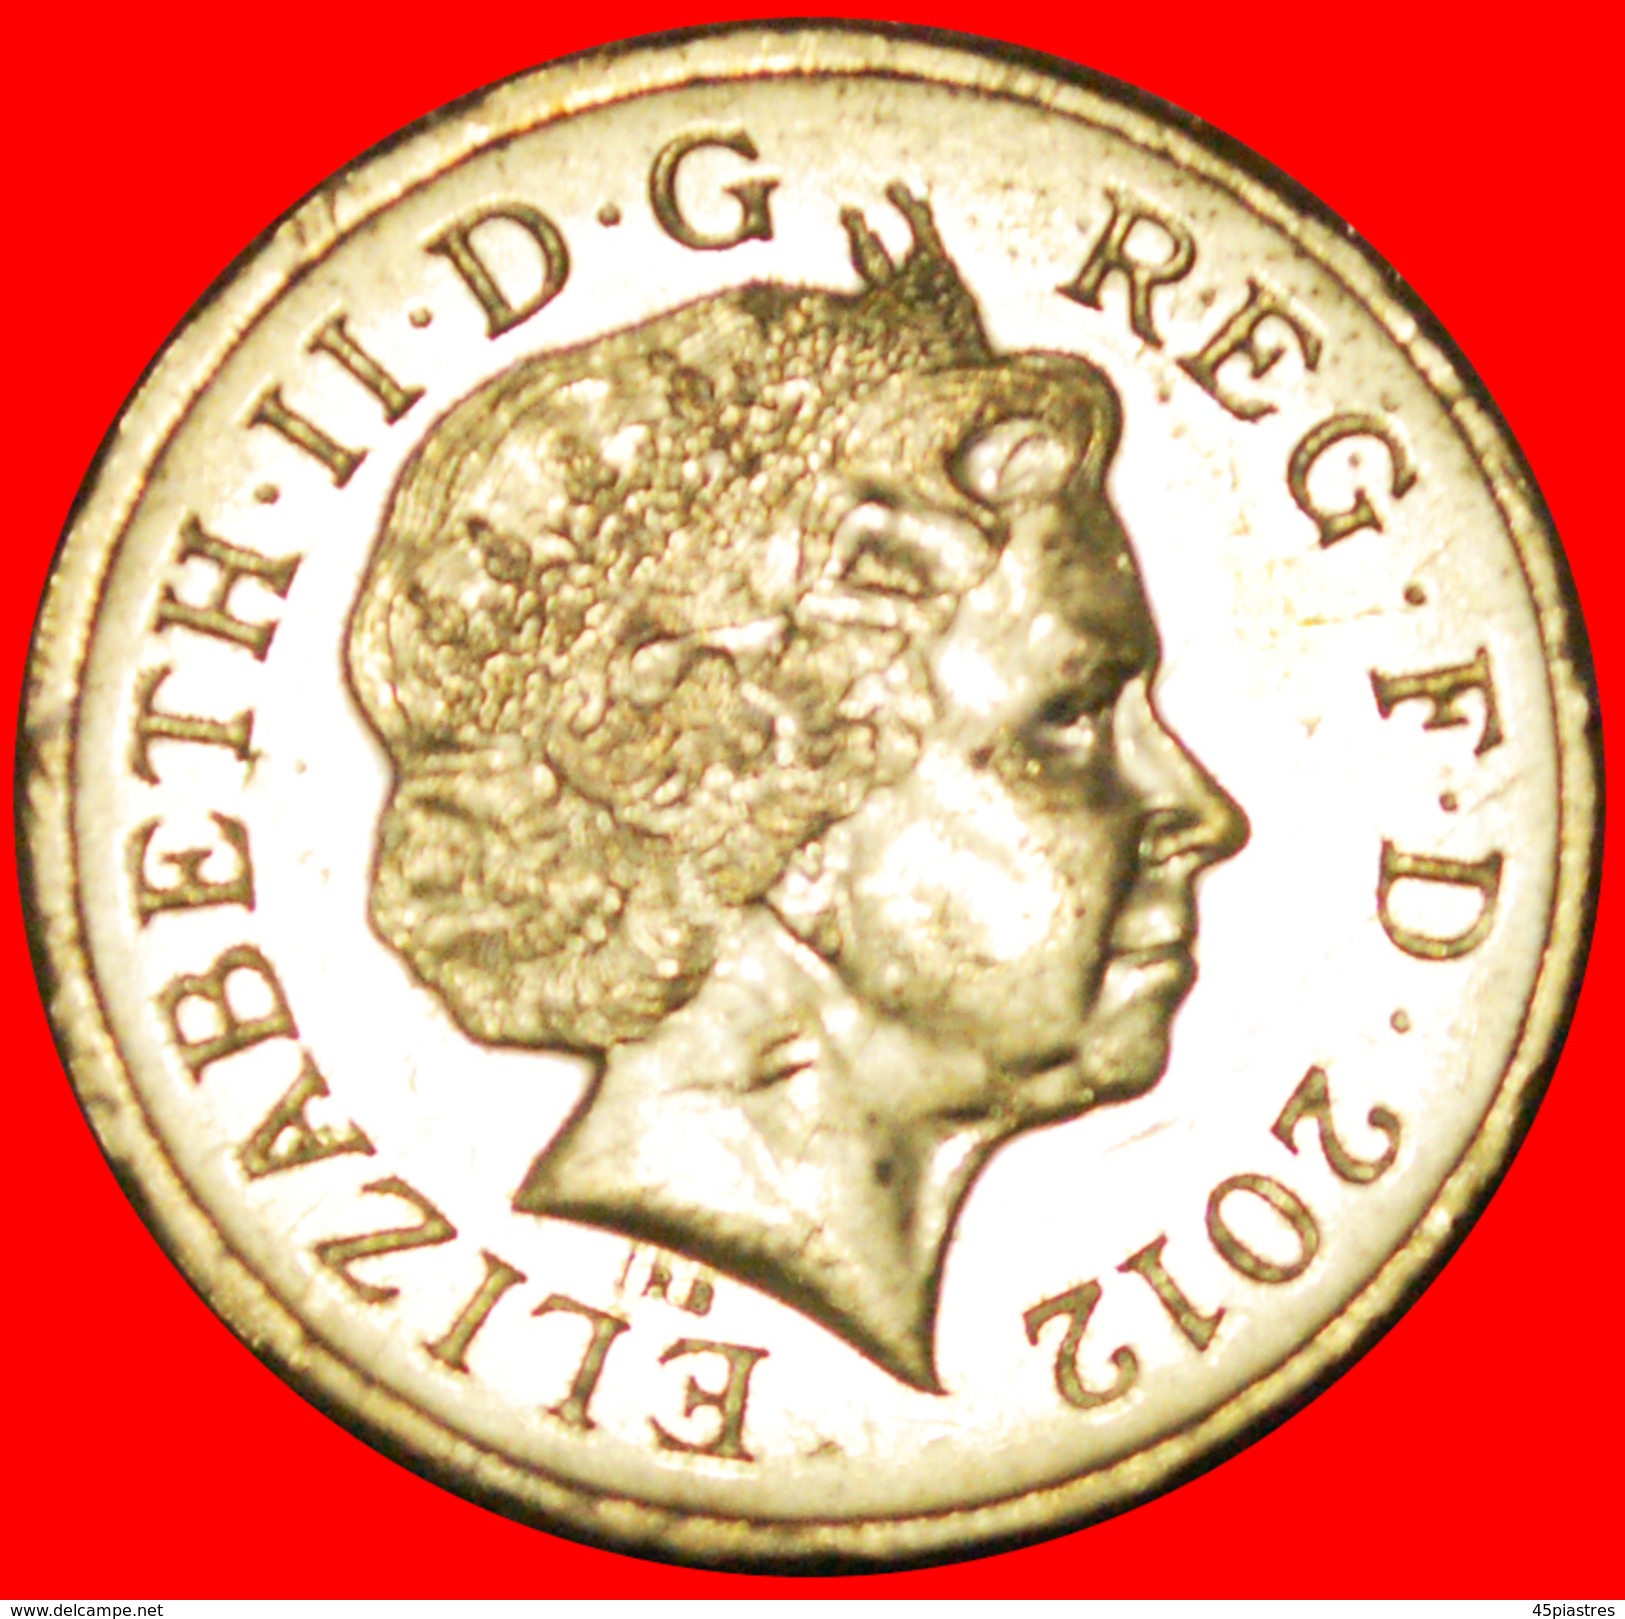 § SHIELD: GREAT BRITAIN &#x2605; 1 POUND 2012  MINT LUSTER!!! LOW START&#x2605; NO RESERVE! - 1 Pound